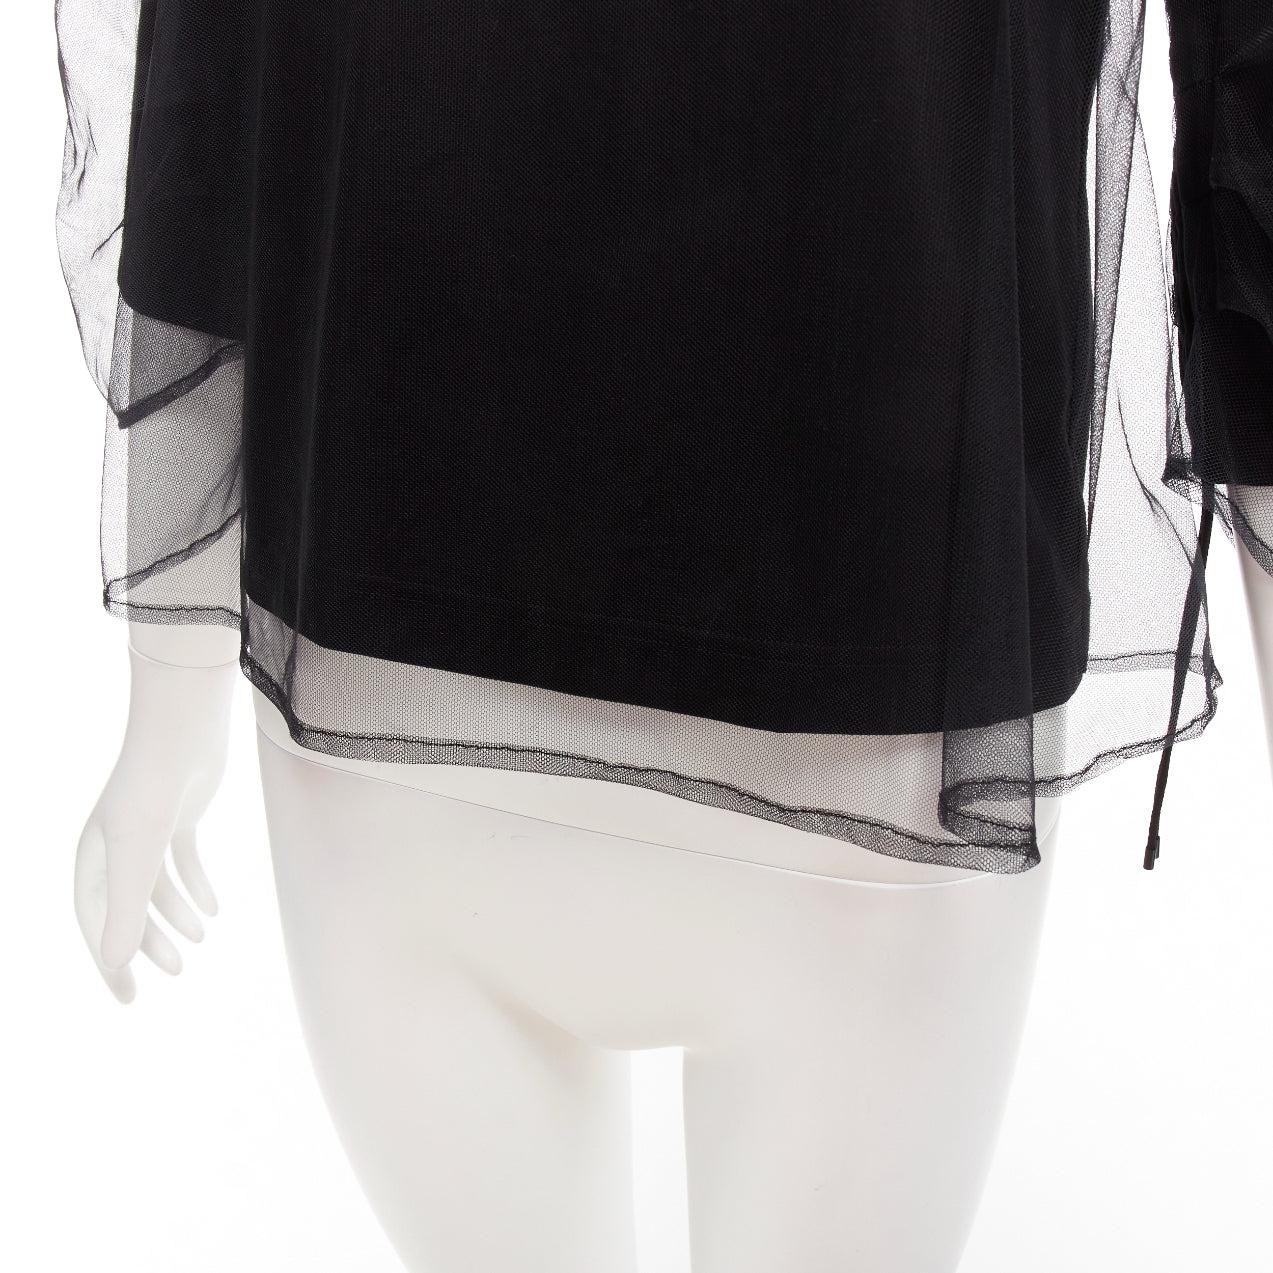 NOIR KEI NINOMIYA 2018 black cotton sheer tulle overlay ruched sleeves tshirt XS For Sale 3